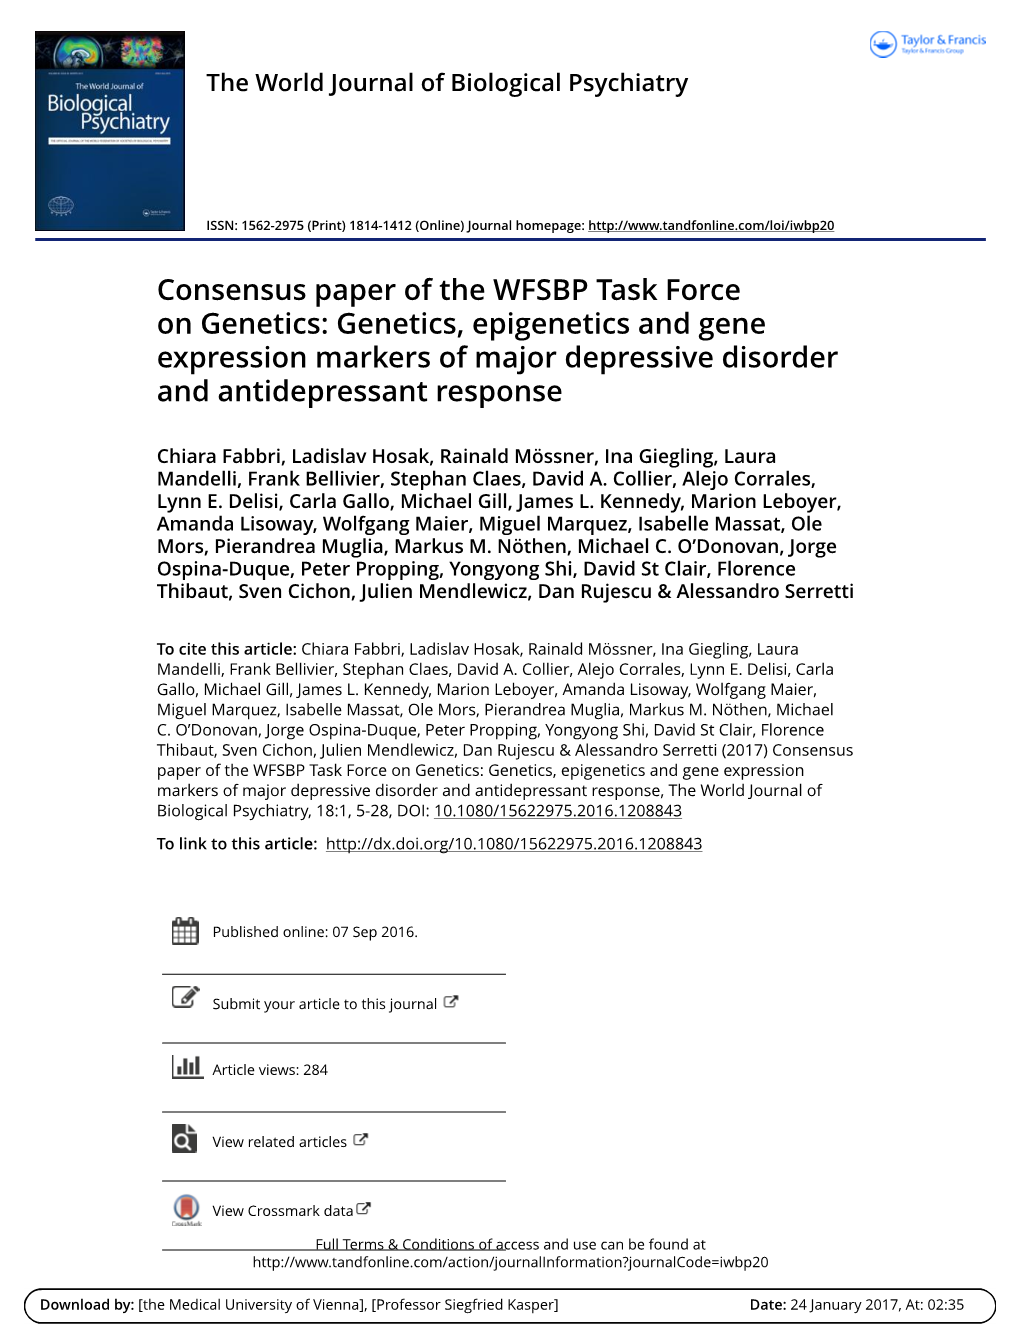 Genetics, Epigenetics and Gene Expression Markers of Major Depressive Disorder and Antidepressant Response